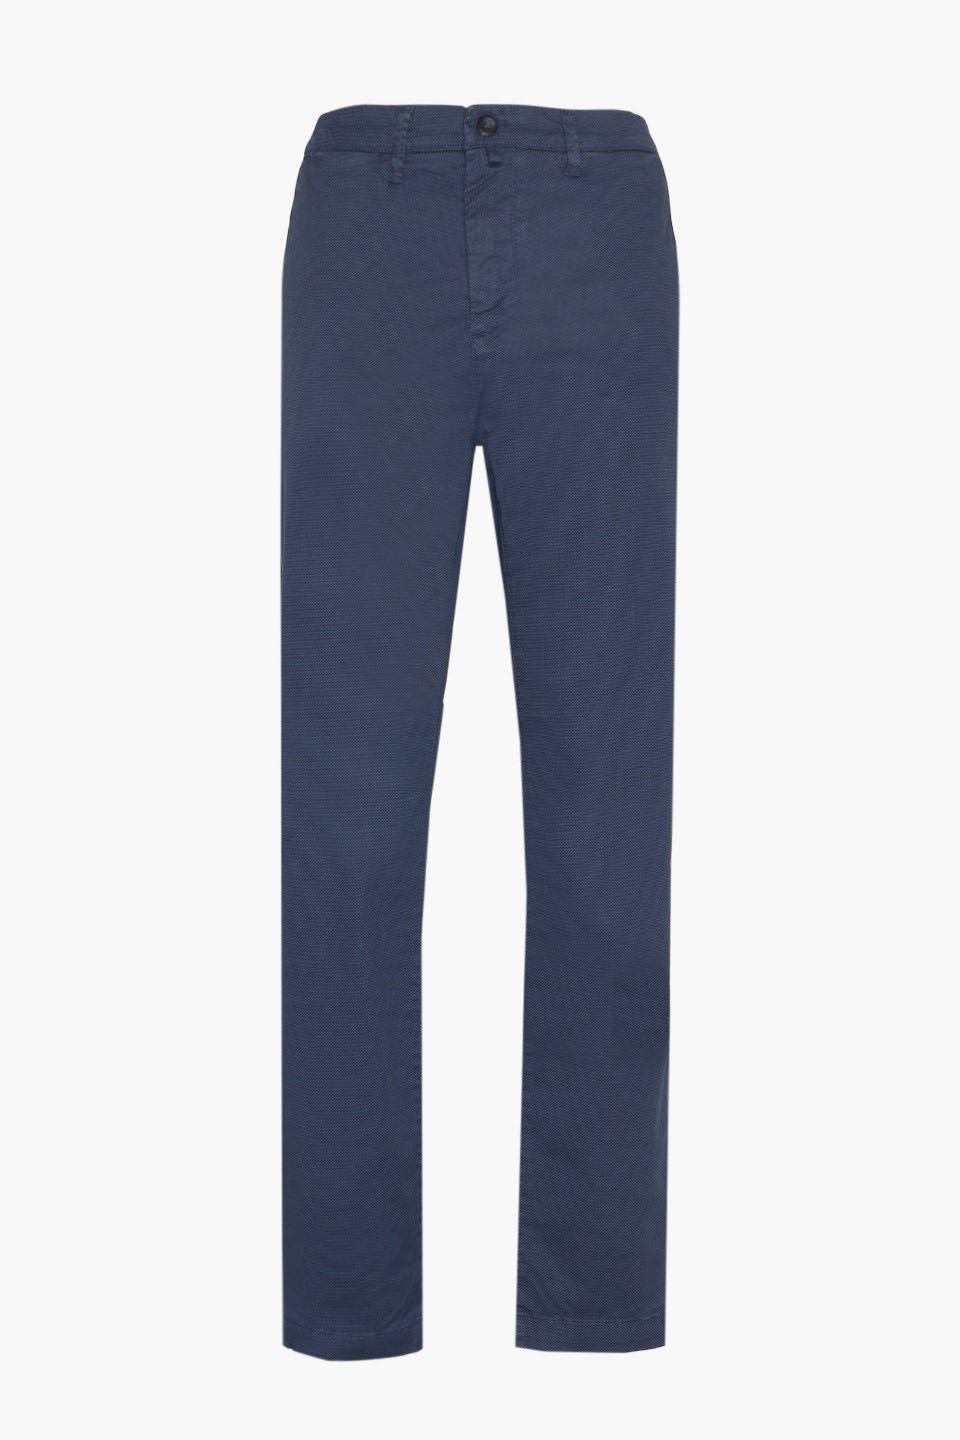 Pantalón de la marca Sorbino Azul